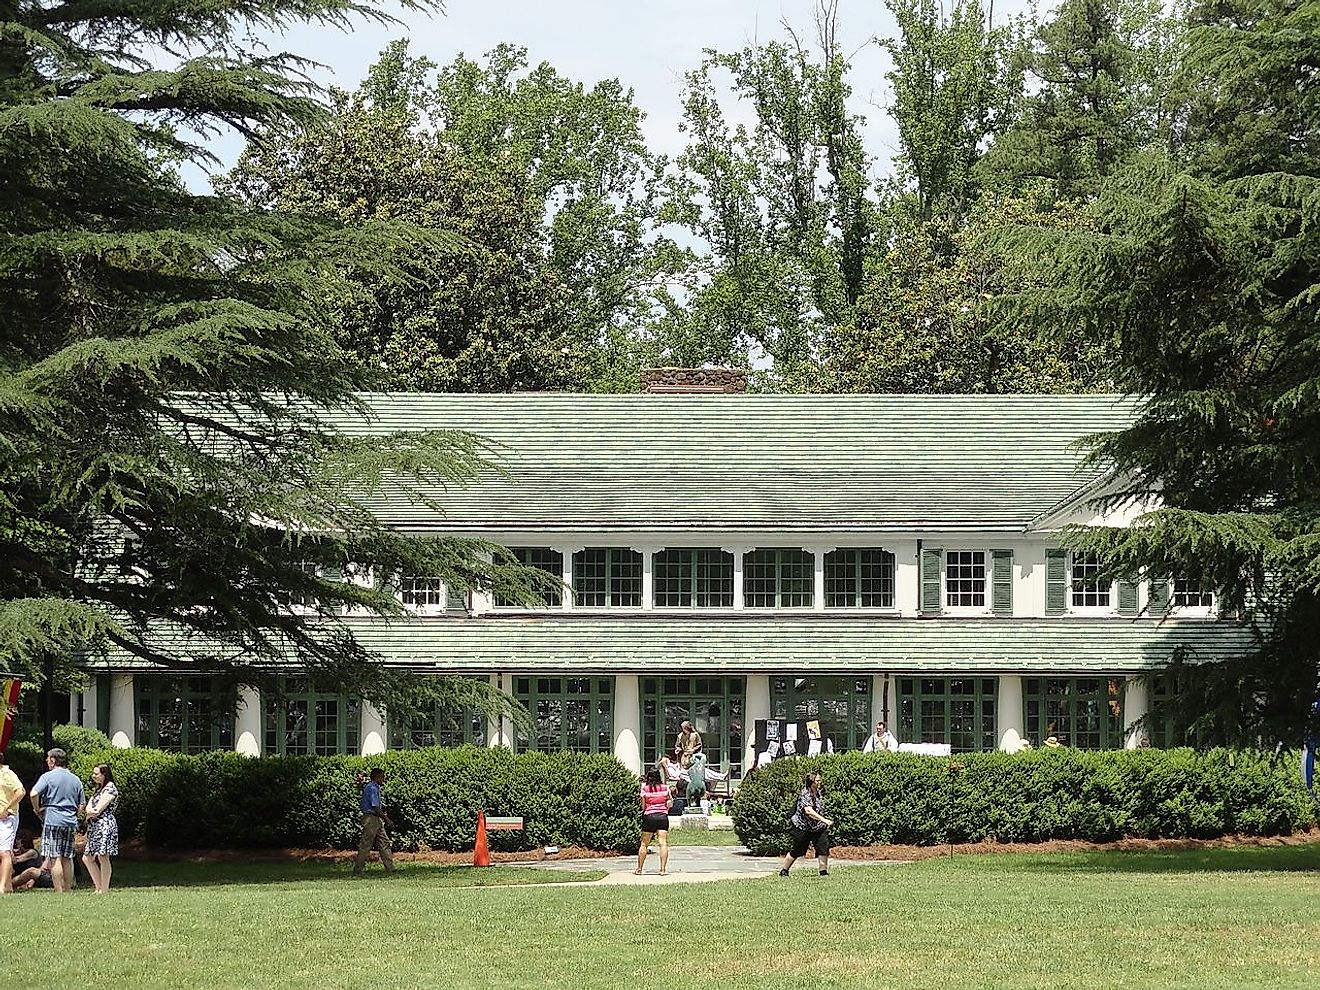 Reynolda House Museum of American Art, at Winston-Salem, North Carolina. Image credit: Mcintern2012/Wikimedia.org